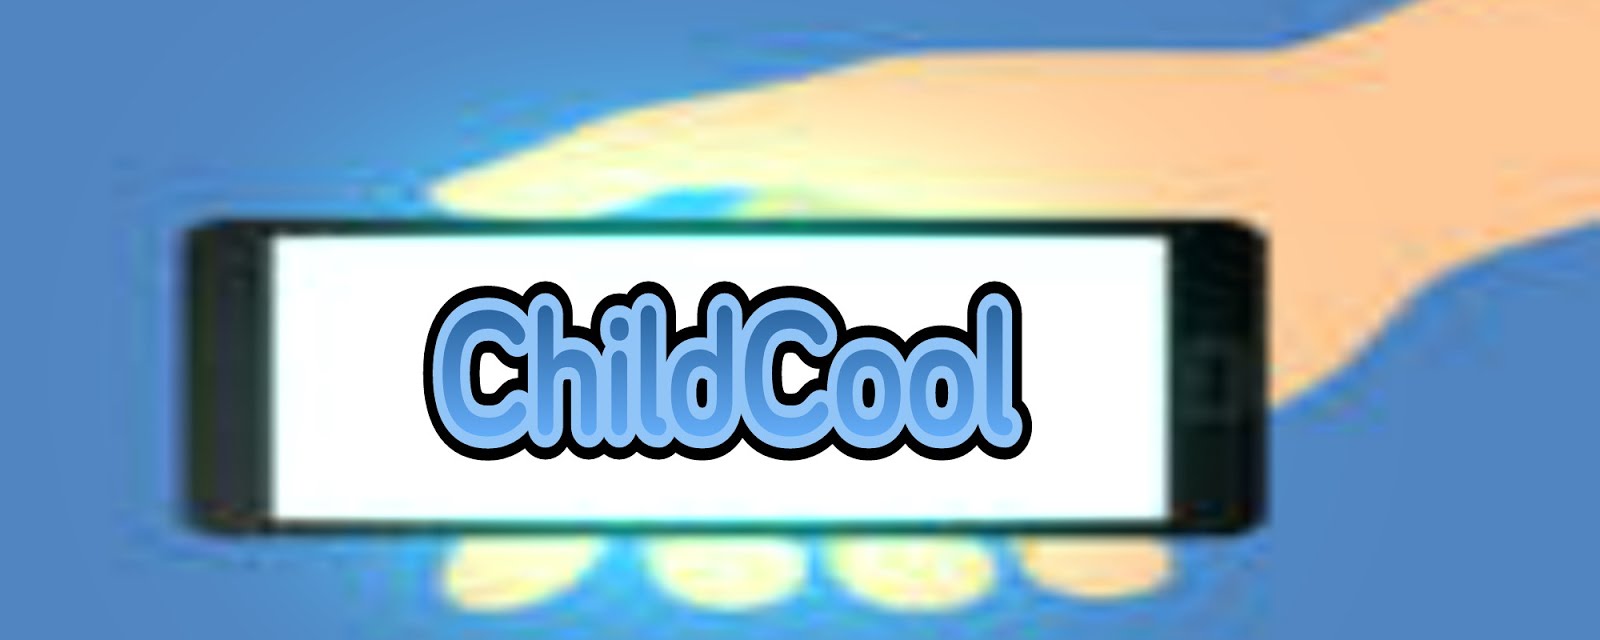 ChildCool